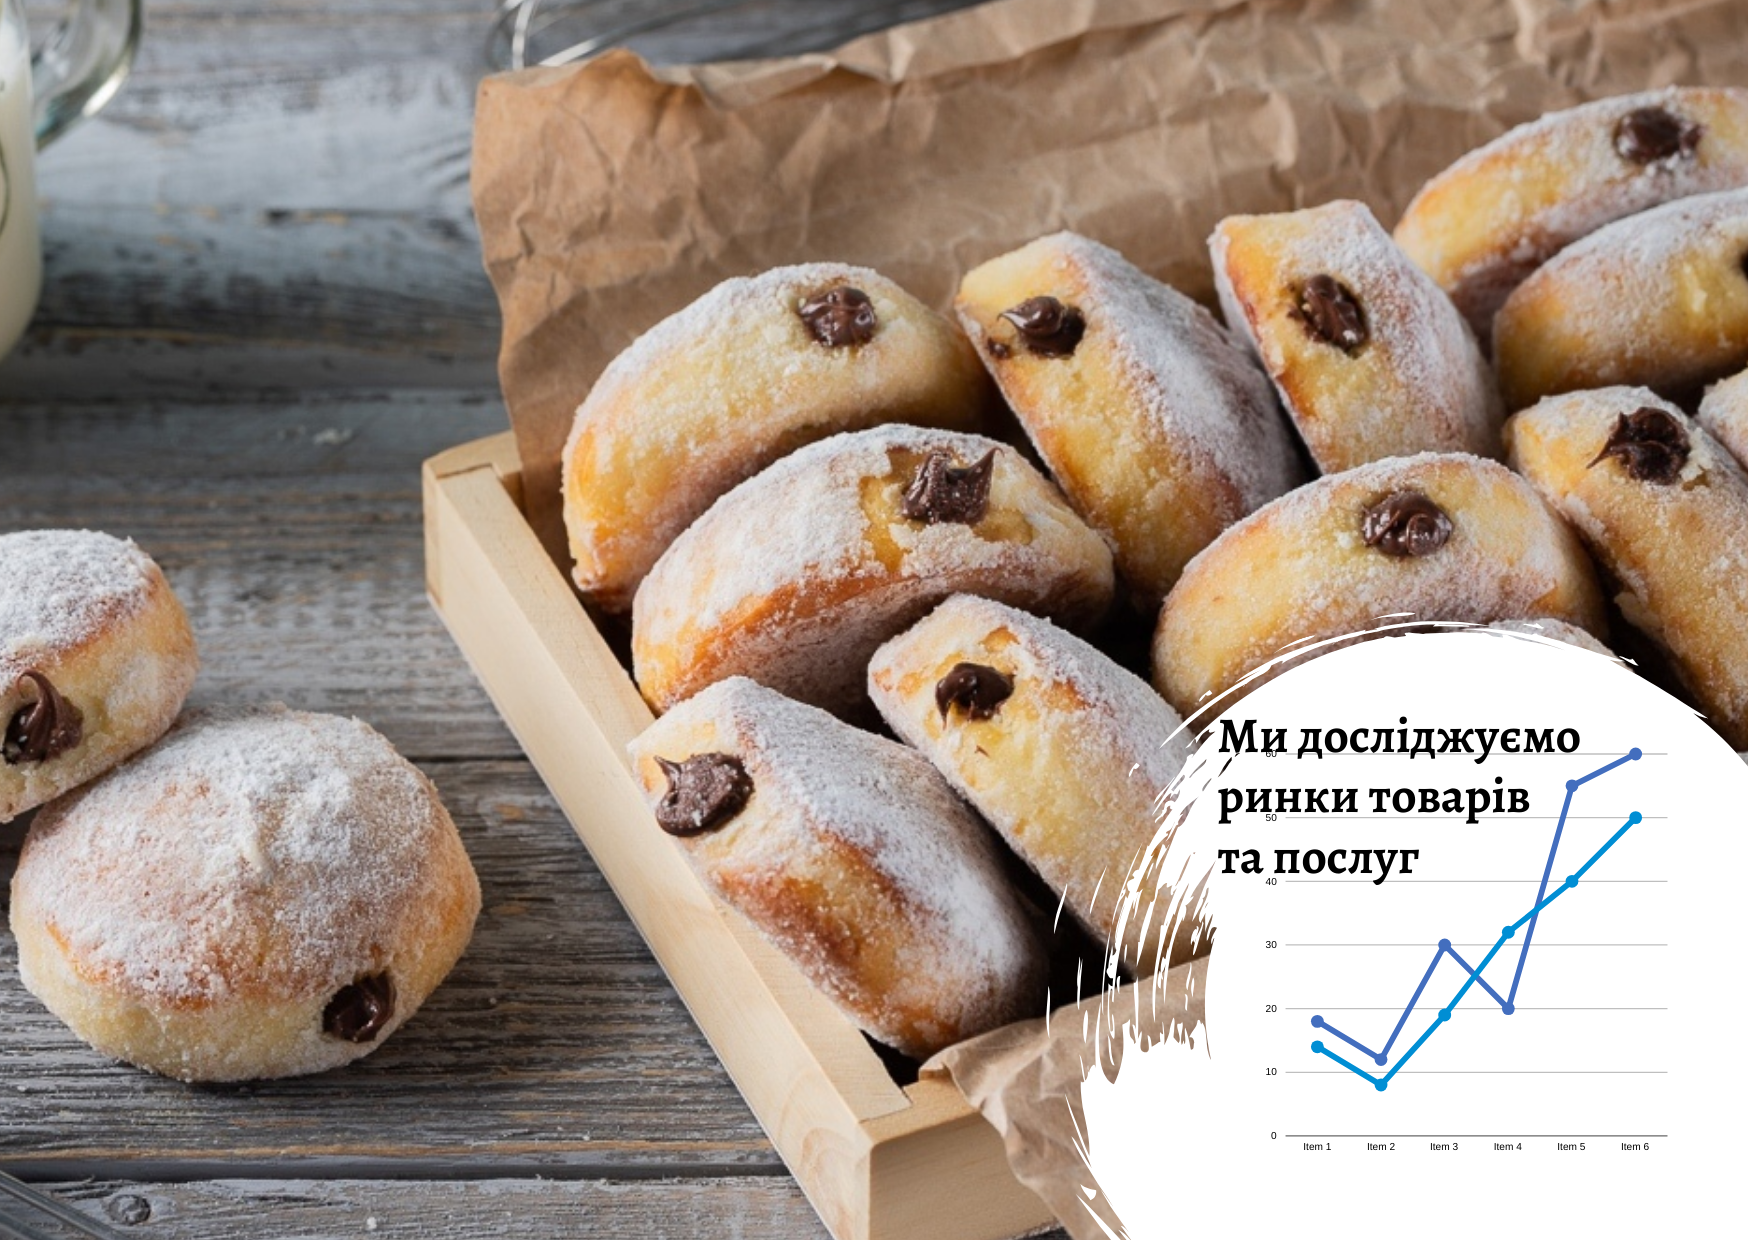 Ukrainian fillings for baking market: recovery